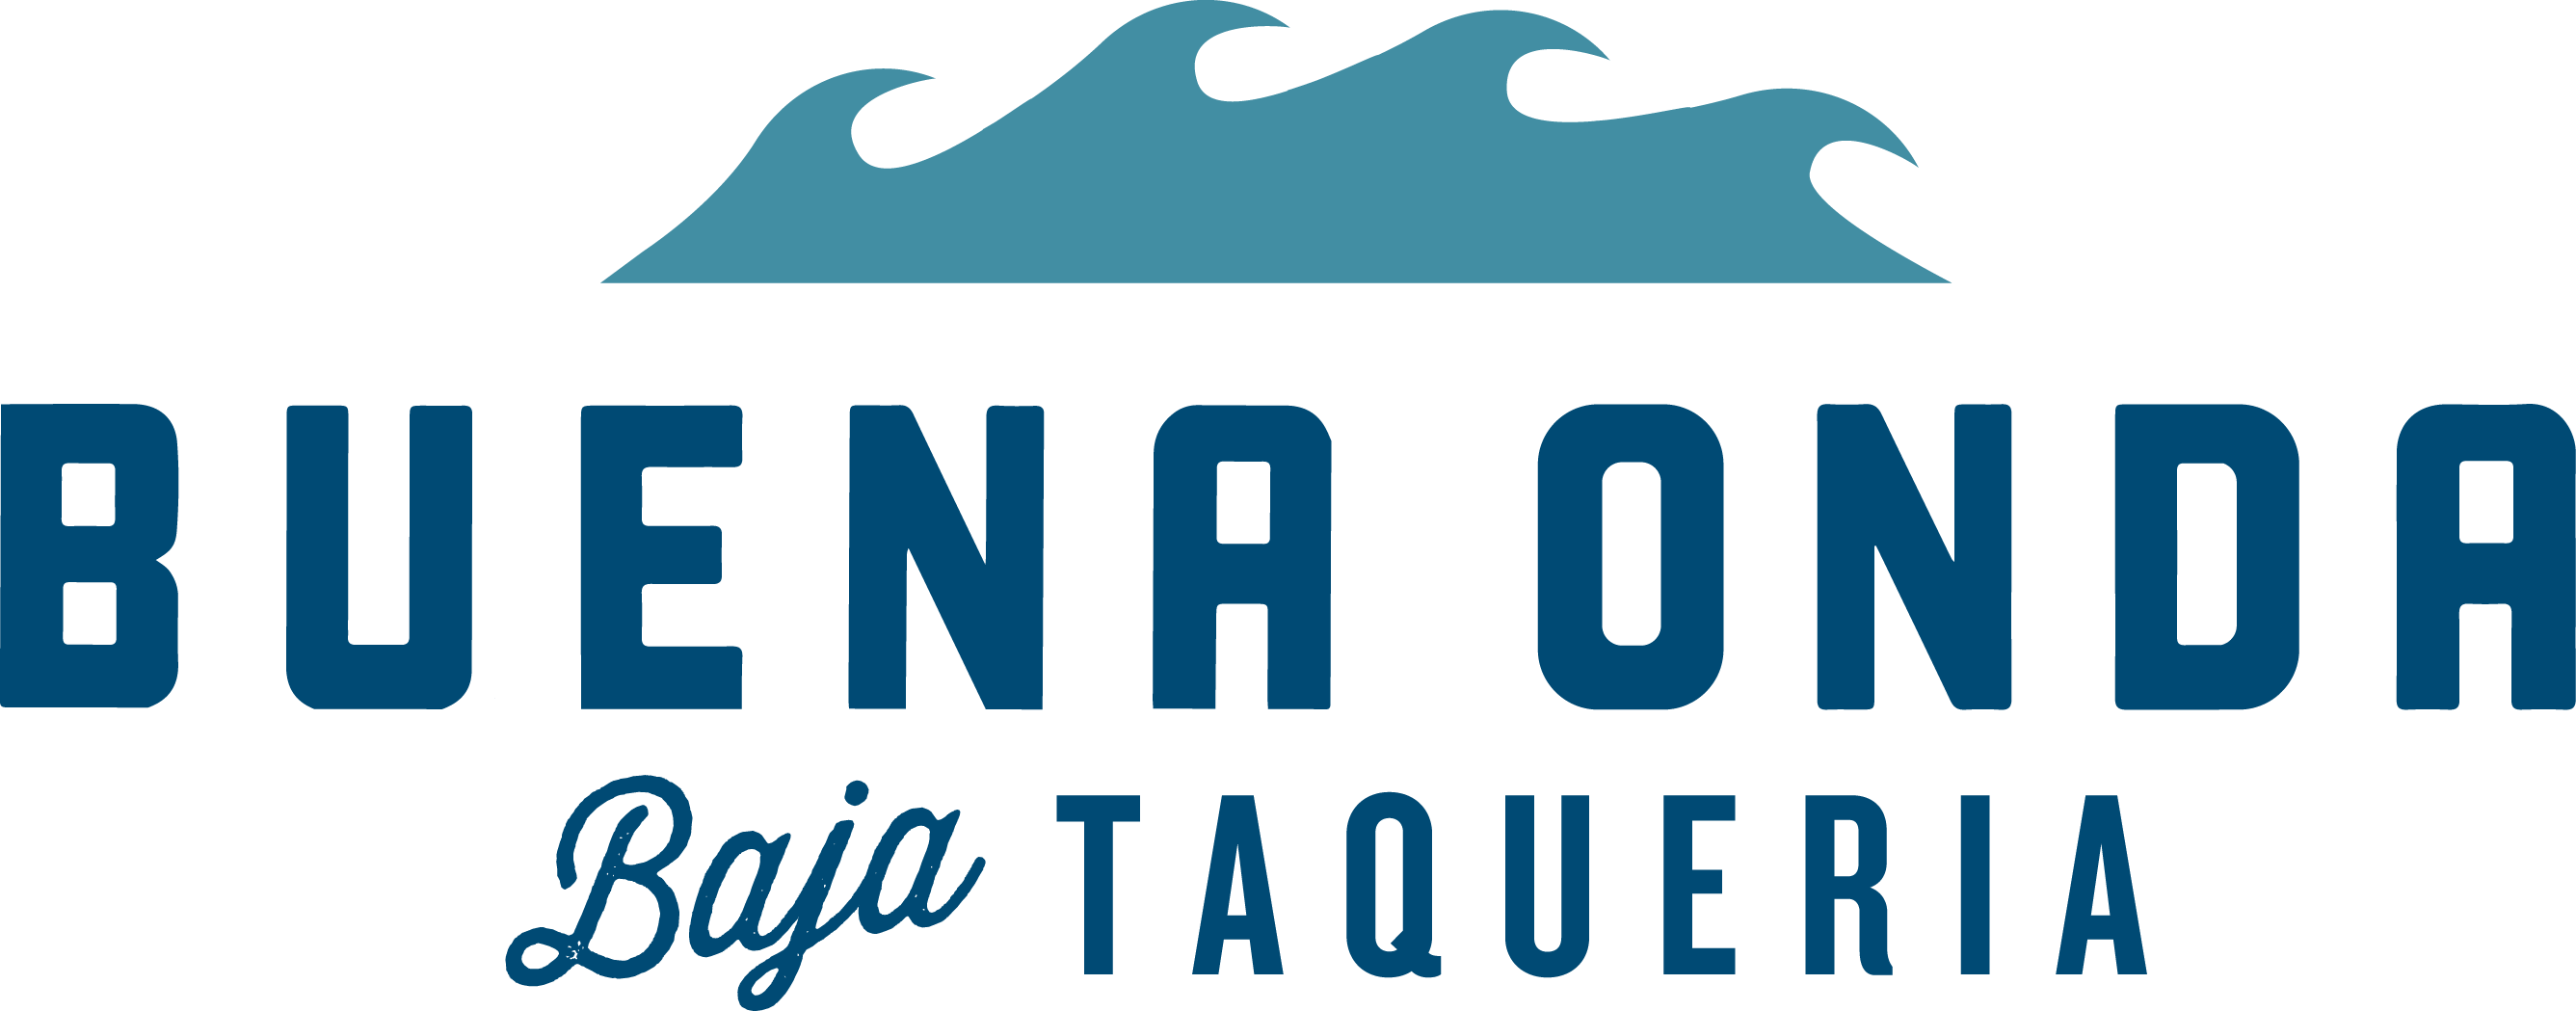 Buena Onda Logo